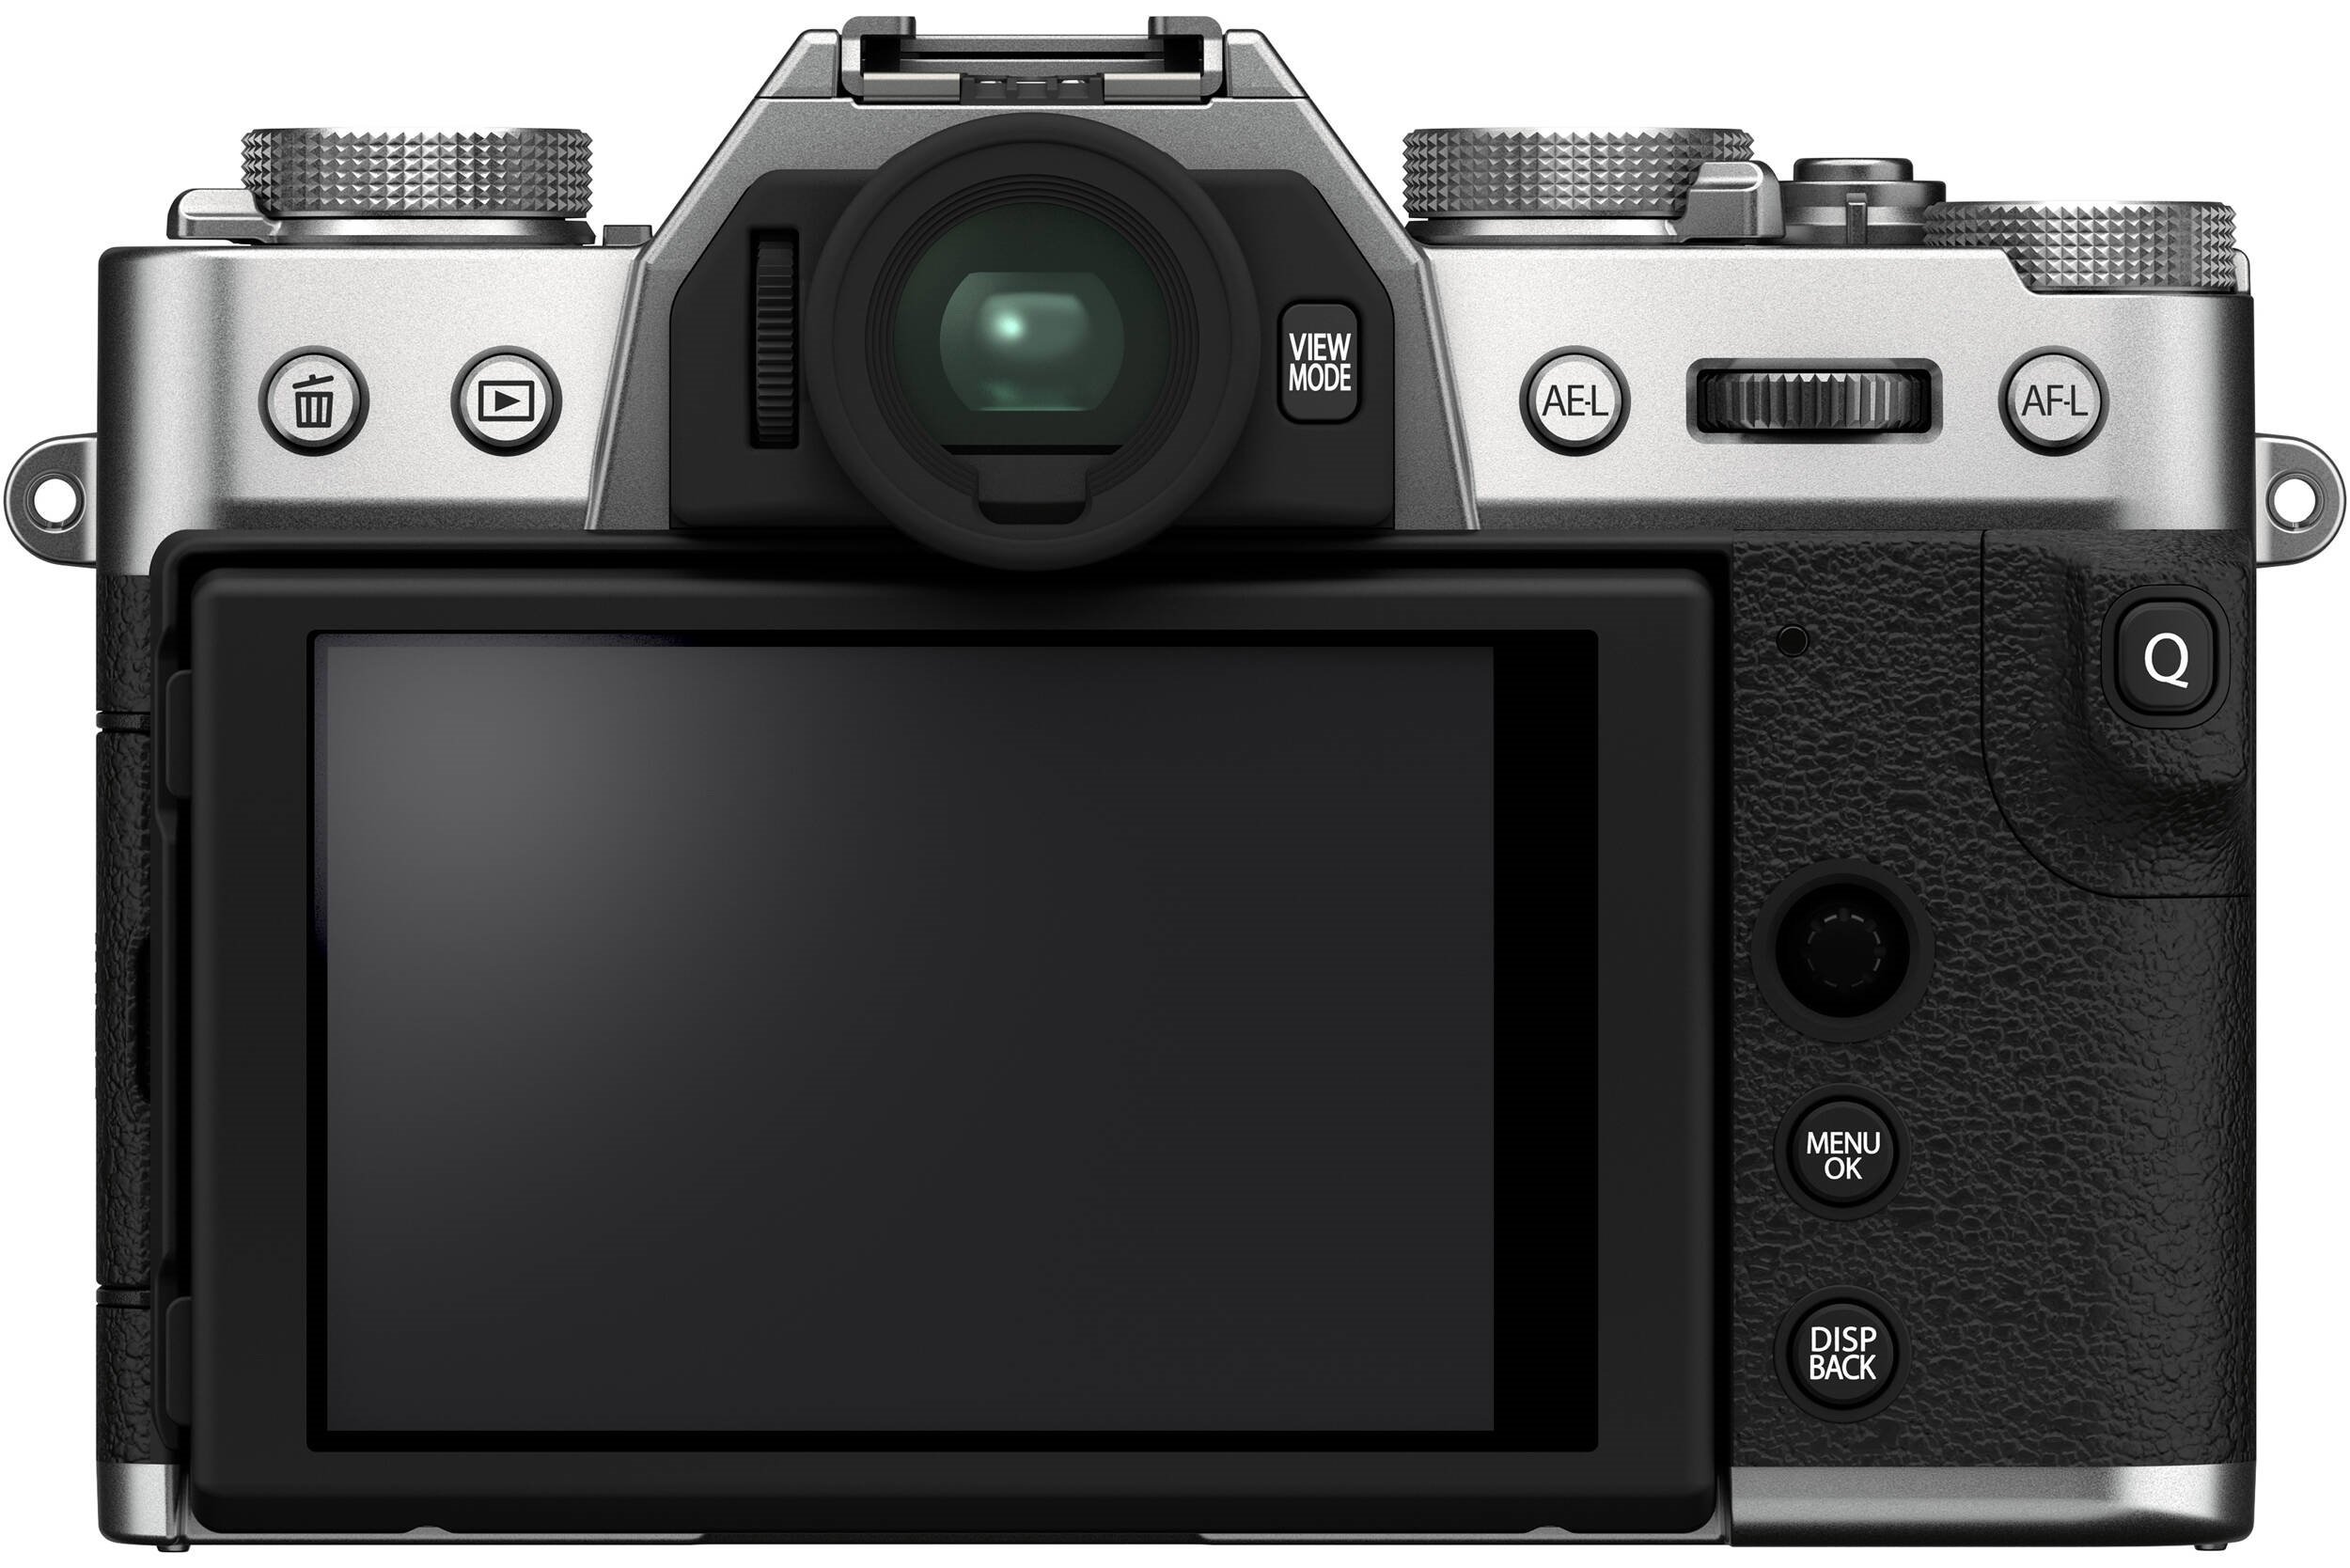 Цифровой фотоаппарат Fujifilm X-T30 II Kit XF 18-55mm F2.8-4 R LM OIS Silver